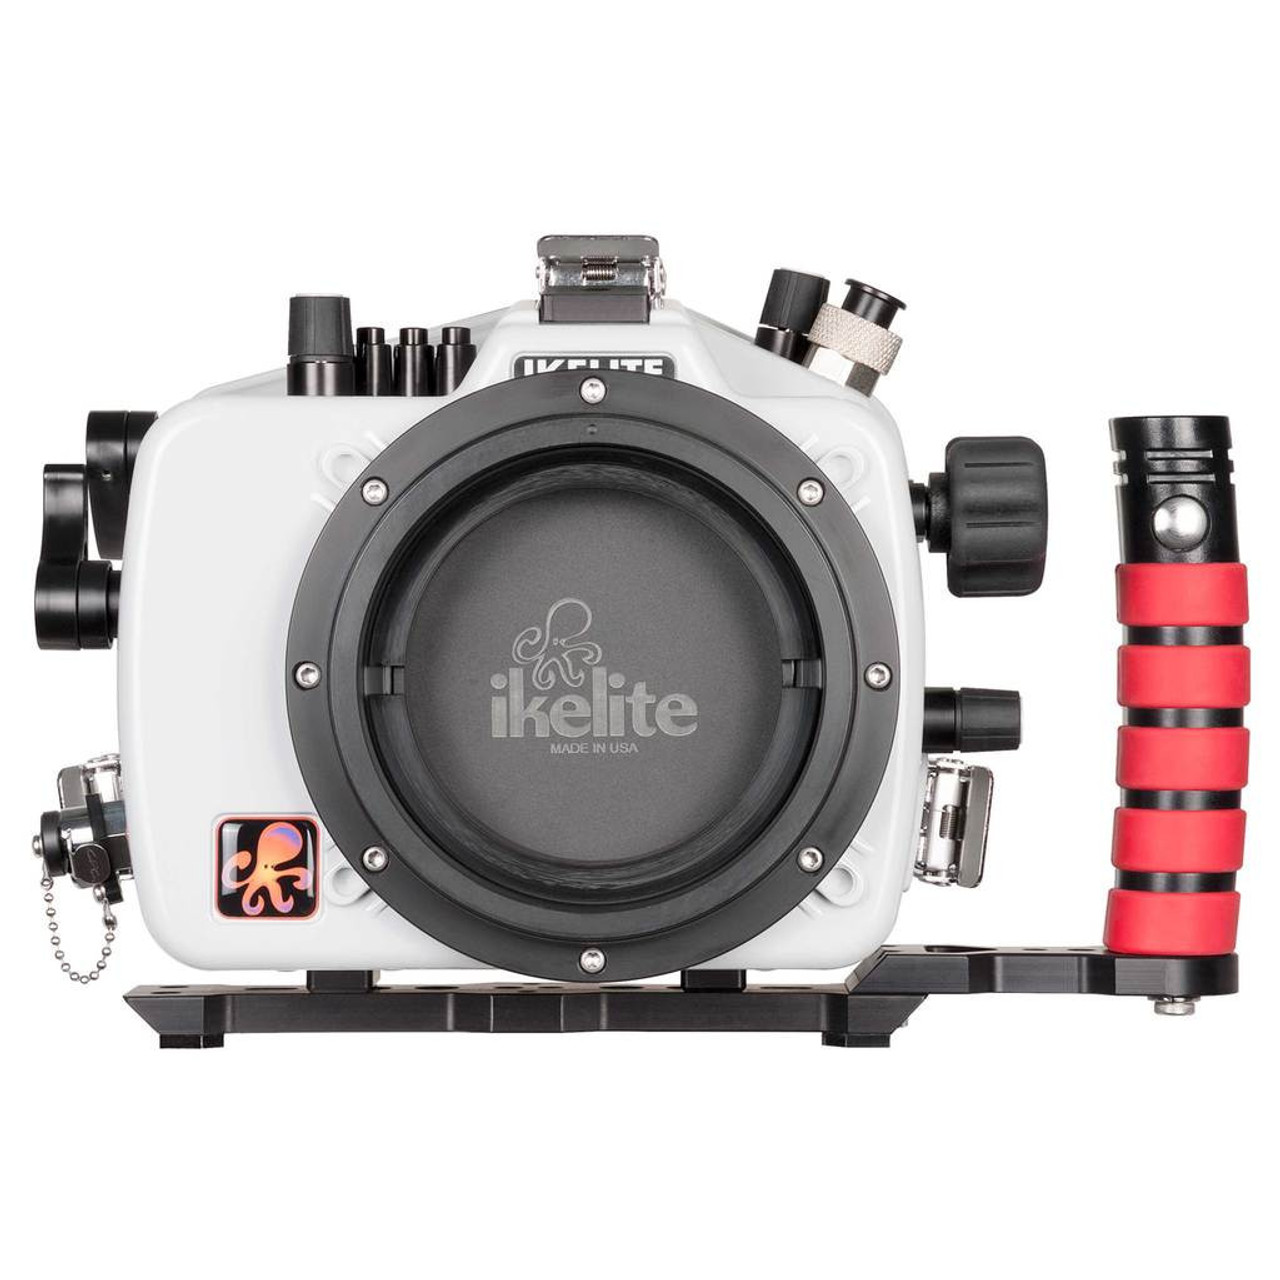 Canon EOS 6D Mark II DSLR Camera By FedEx